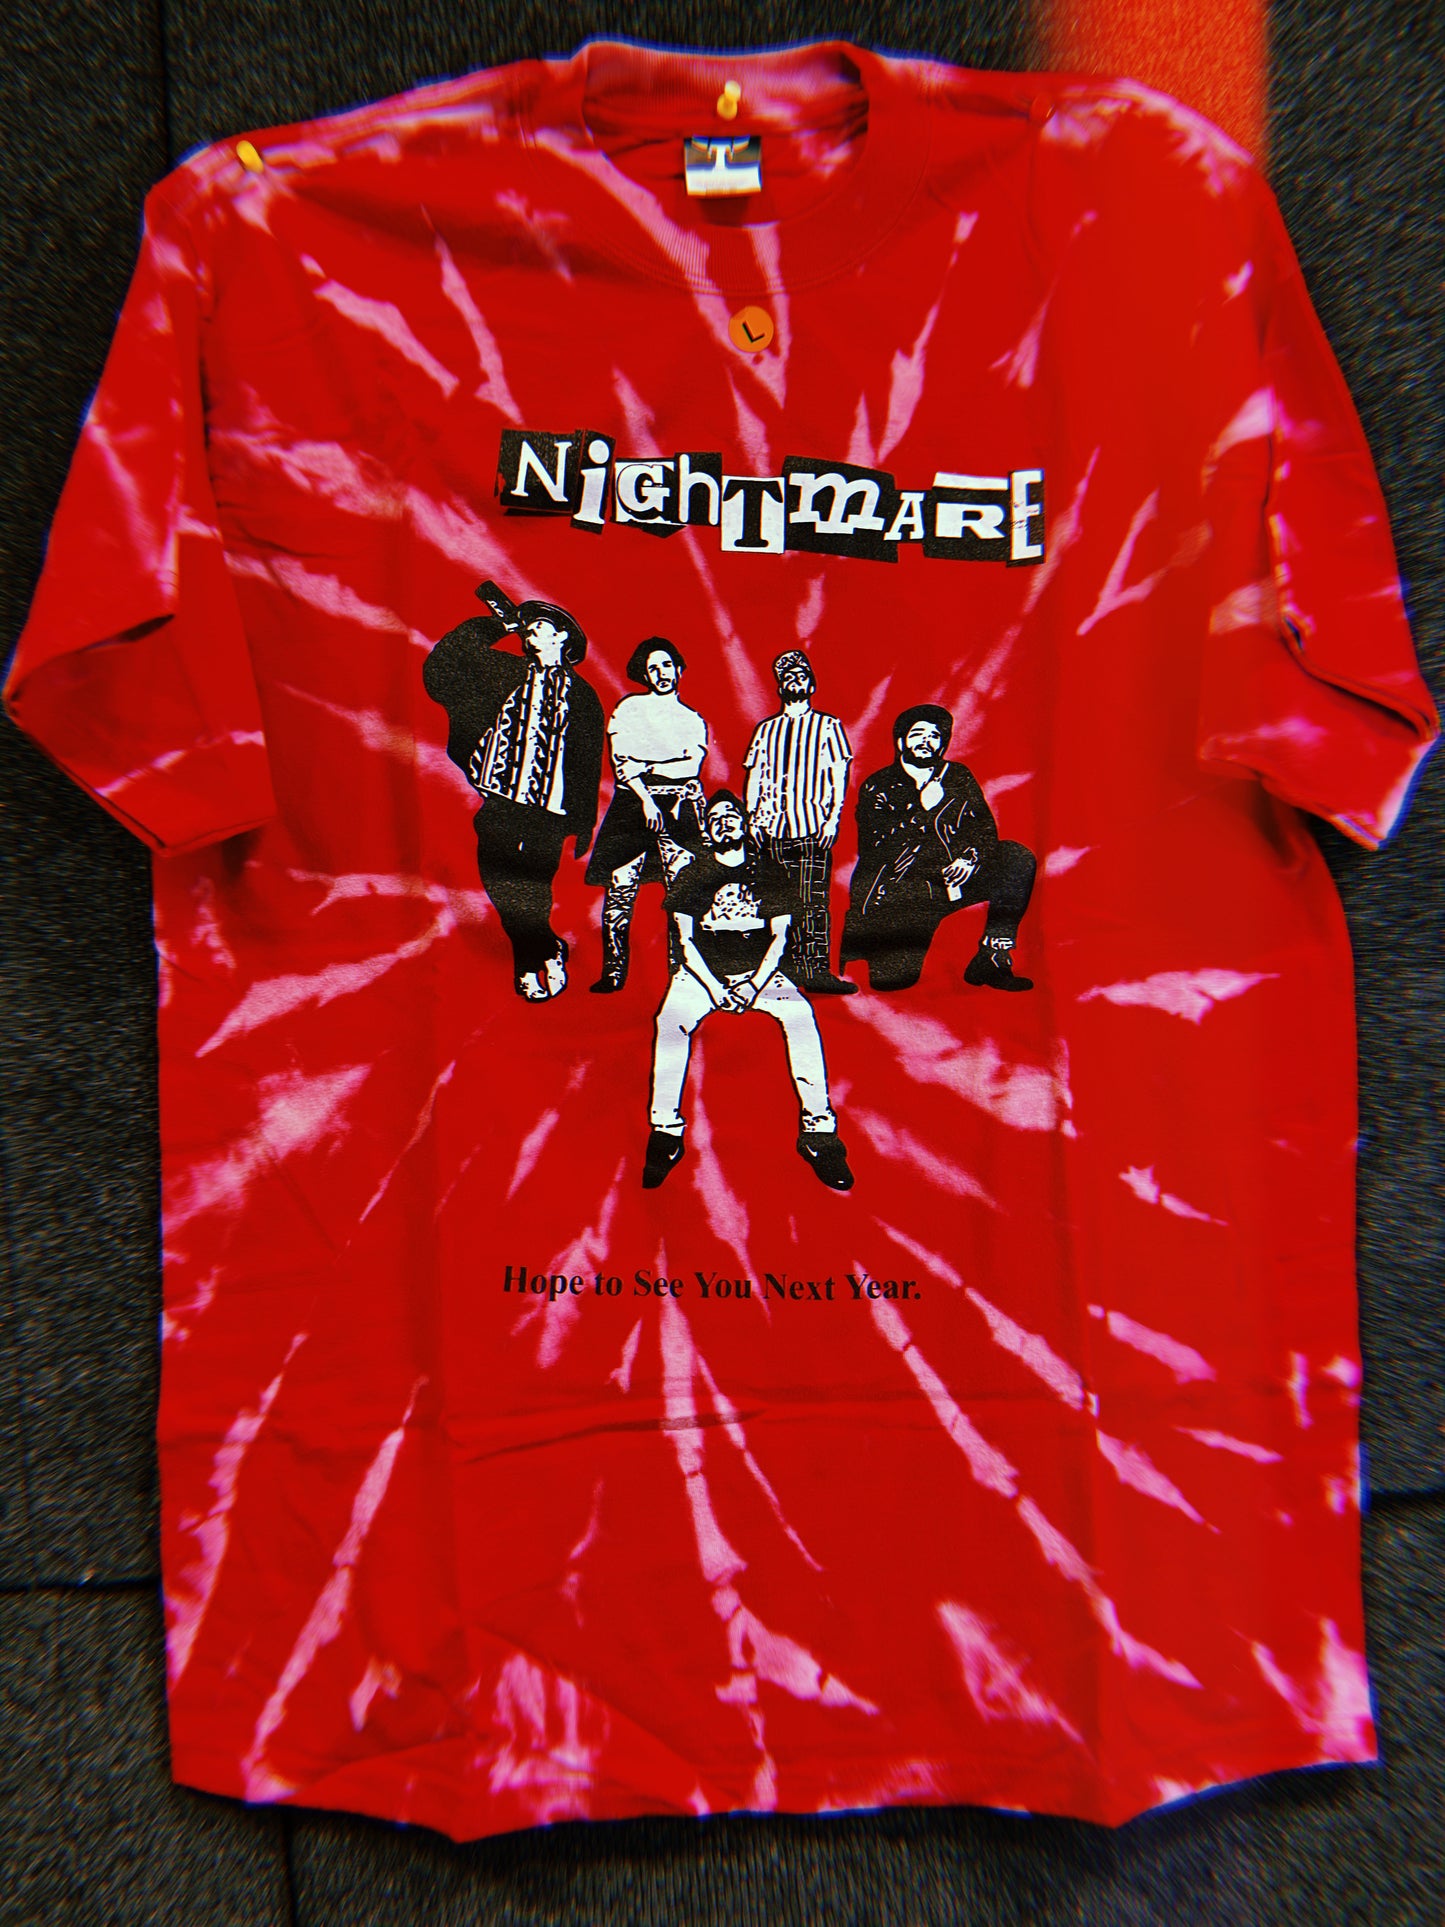 $10 Nightmare Final Sale Shirt